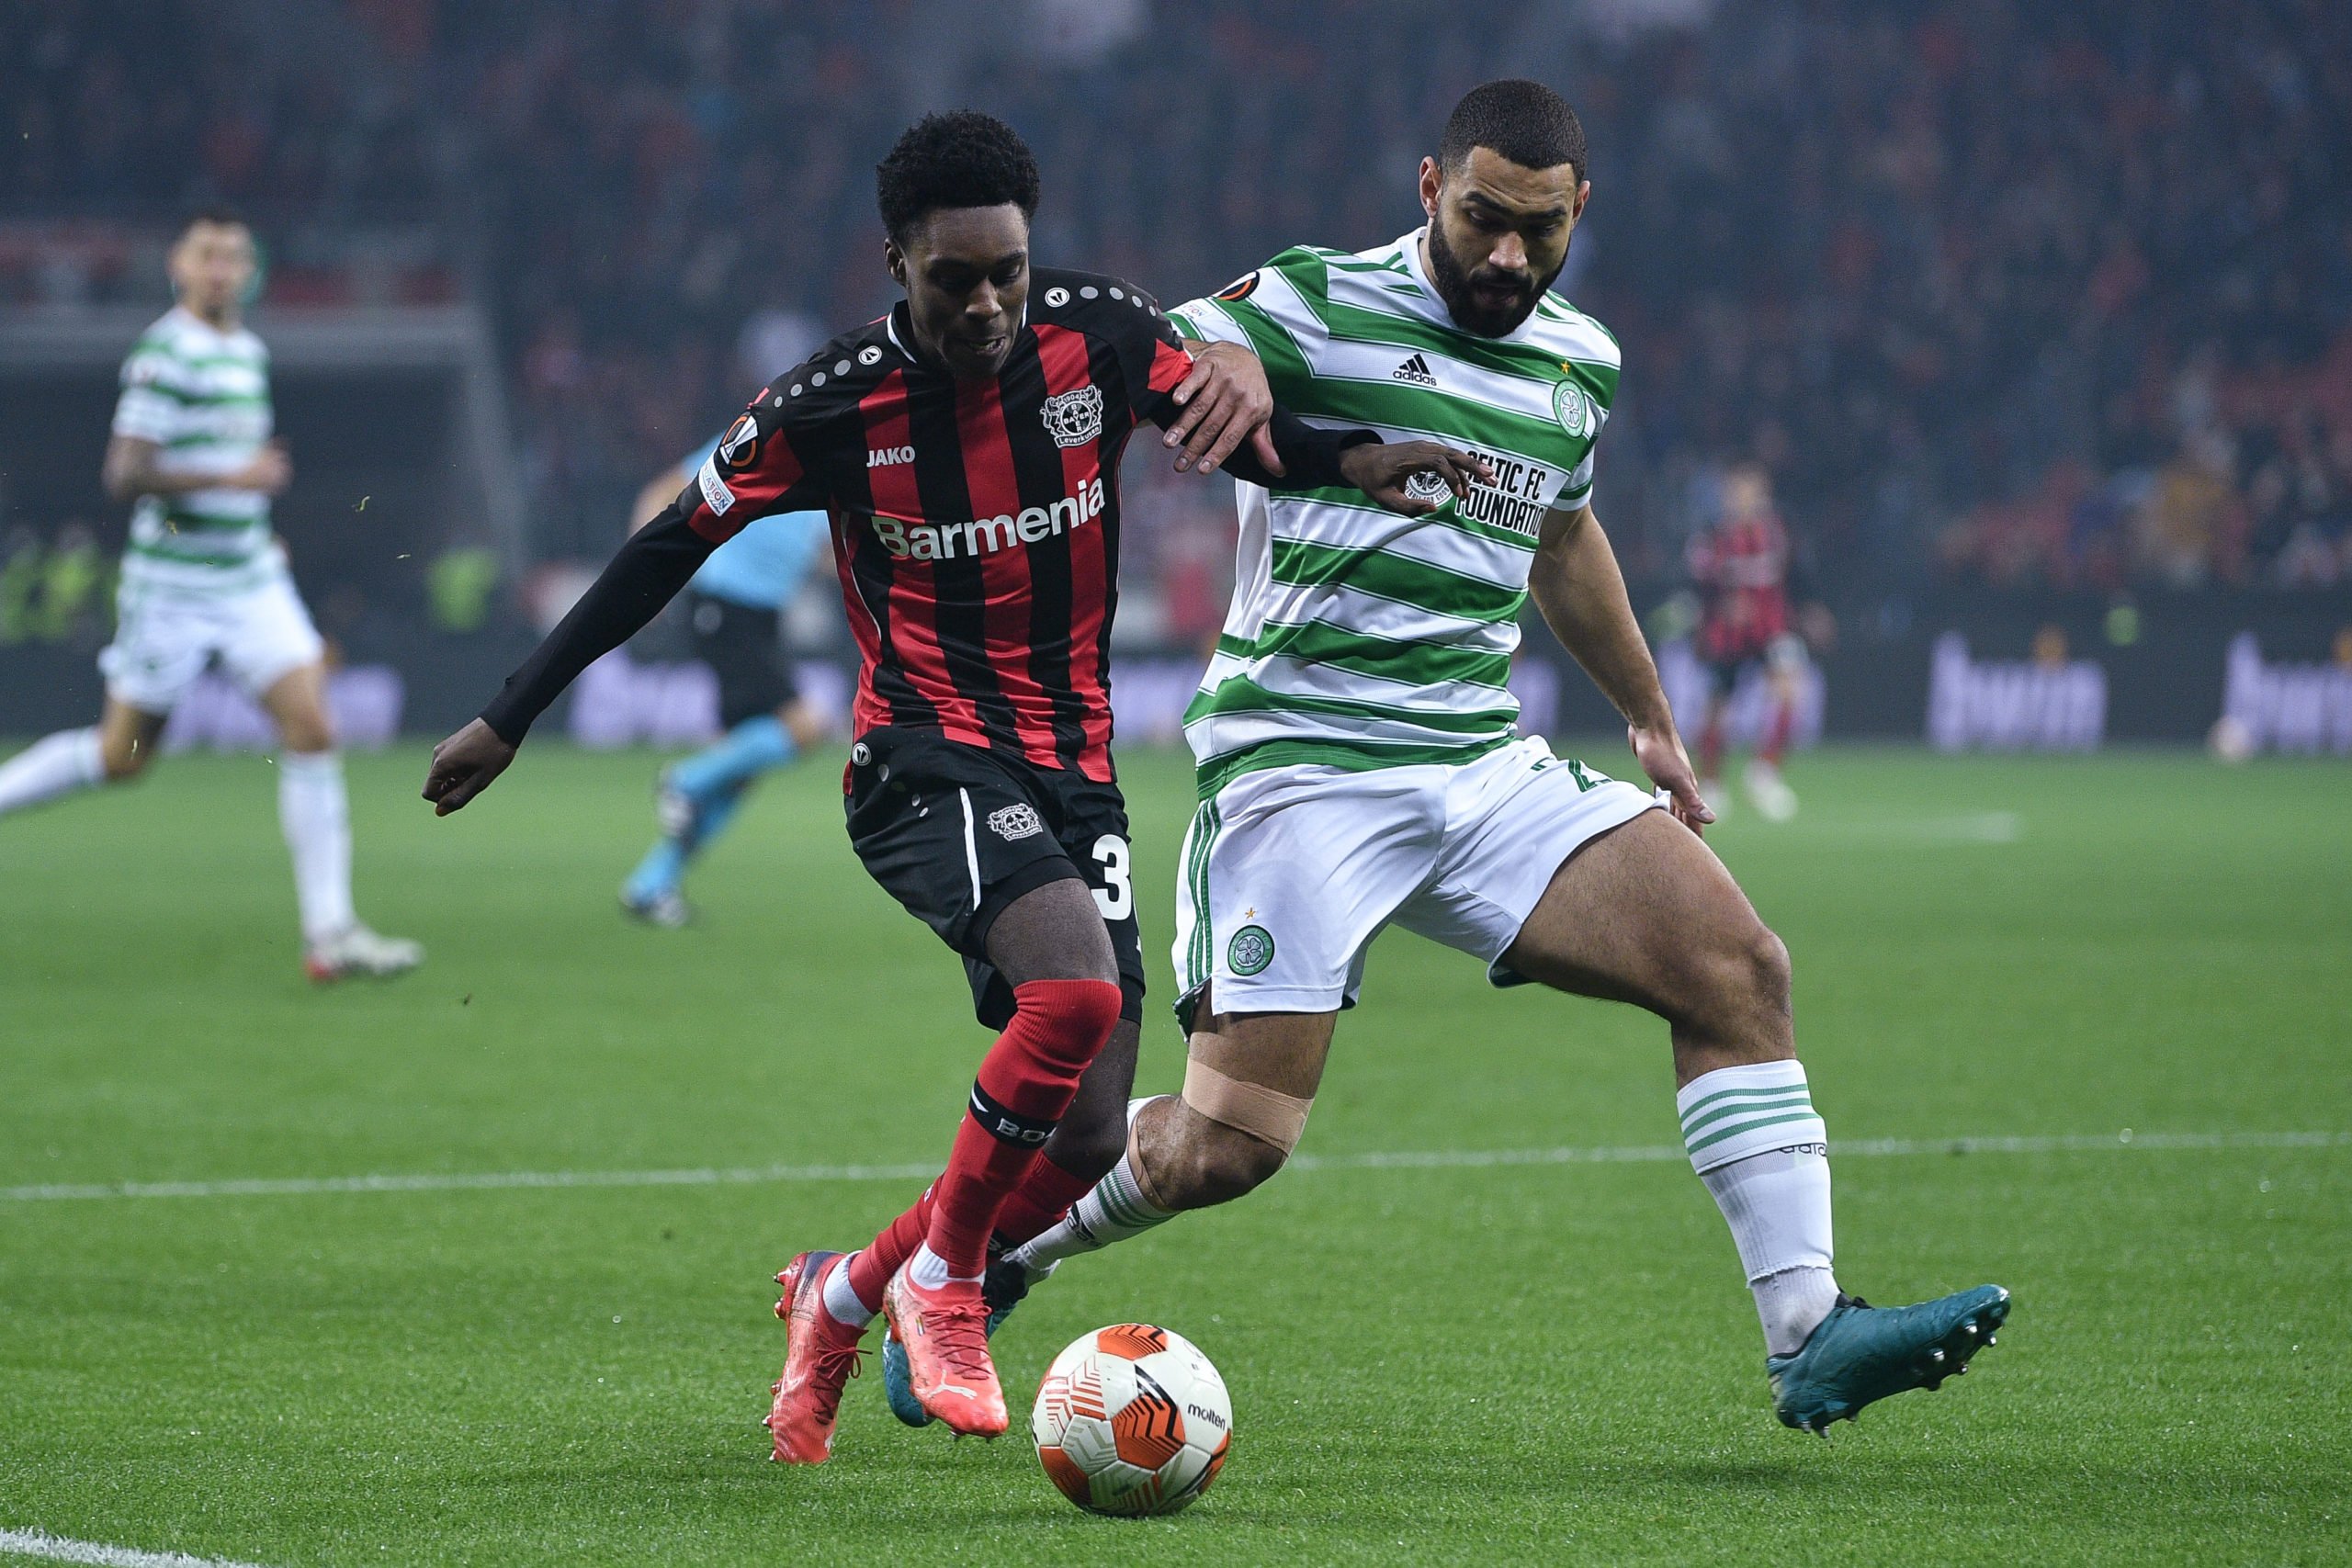 Celtic defender Cameron Carter-Vickers in action against Bayer Leverkusen